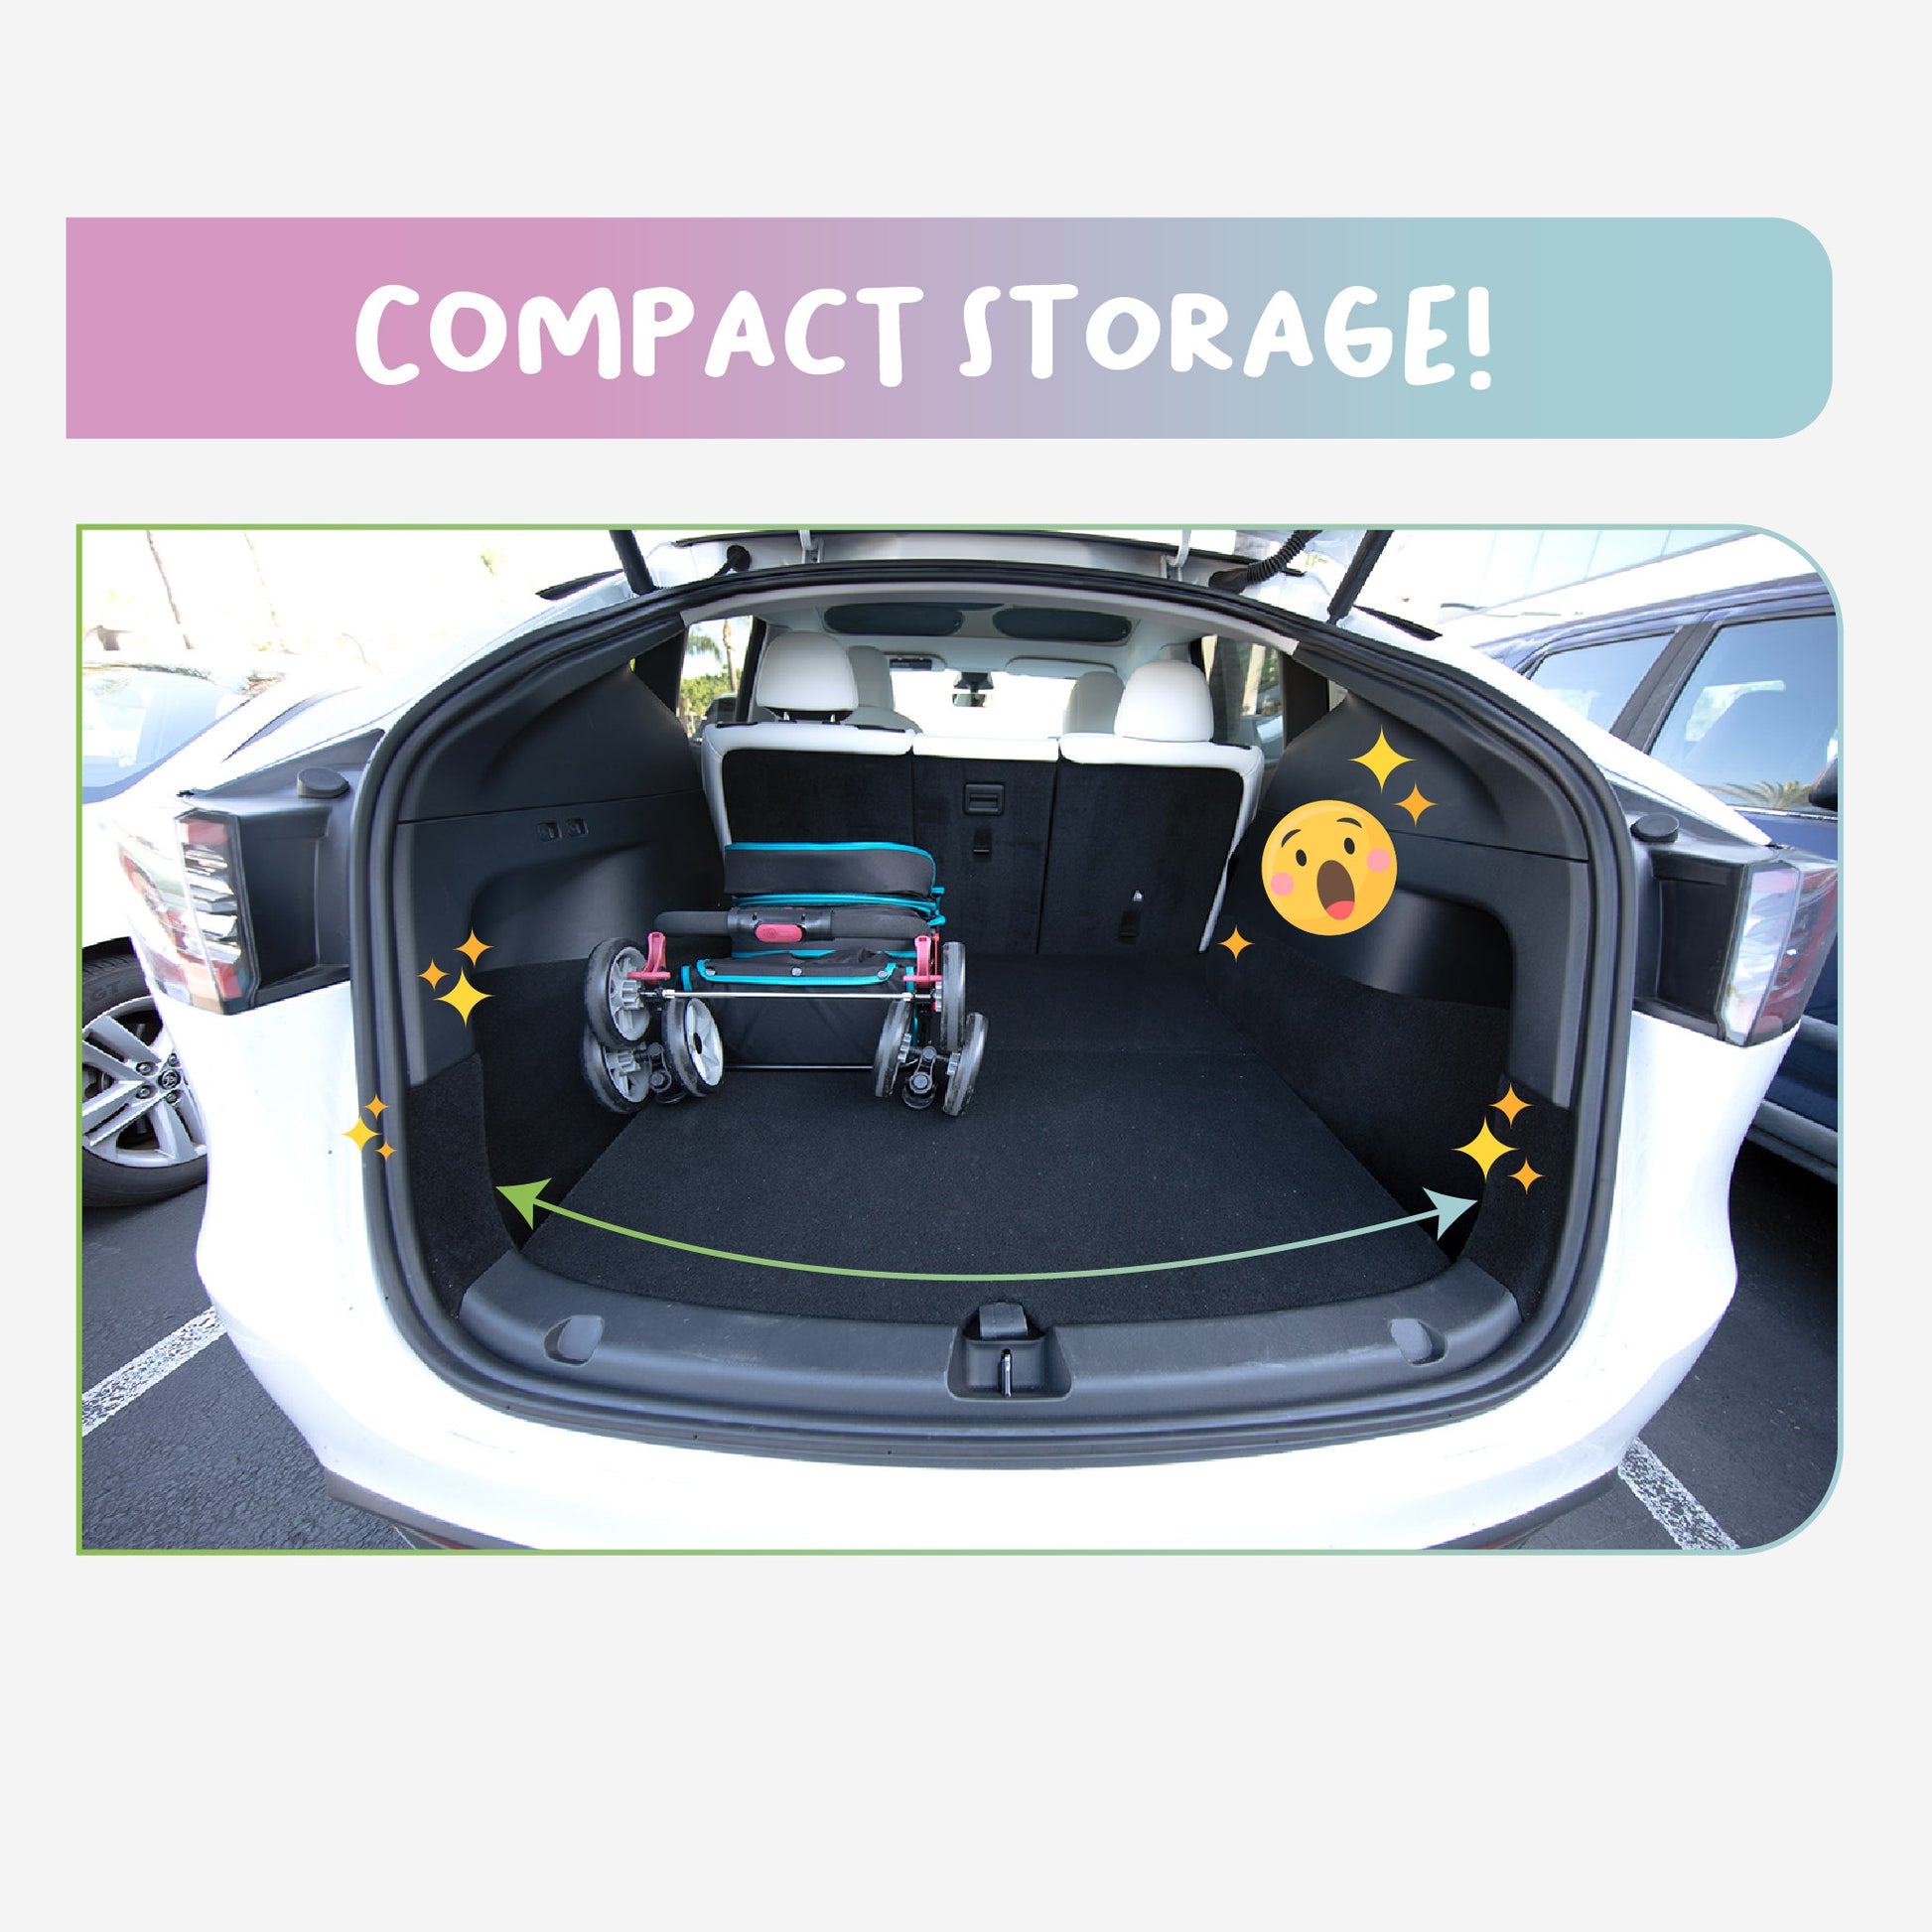 swift pet stroller folds compact in car trunk